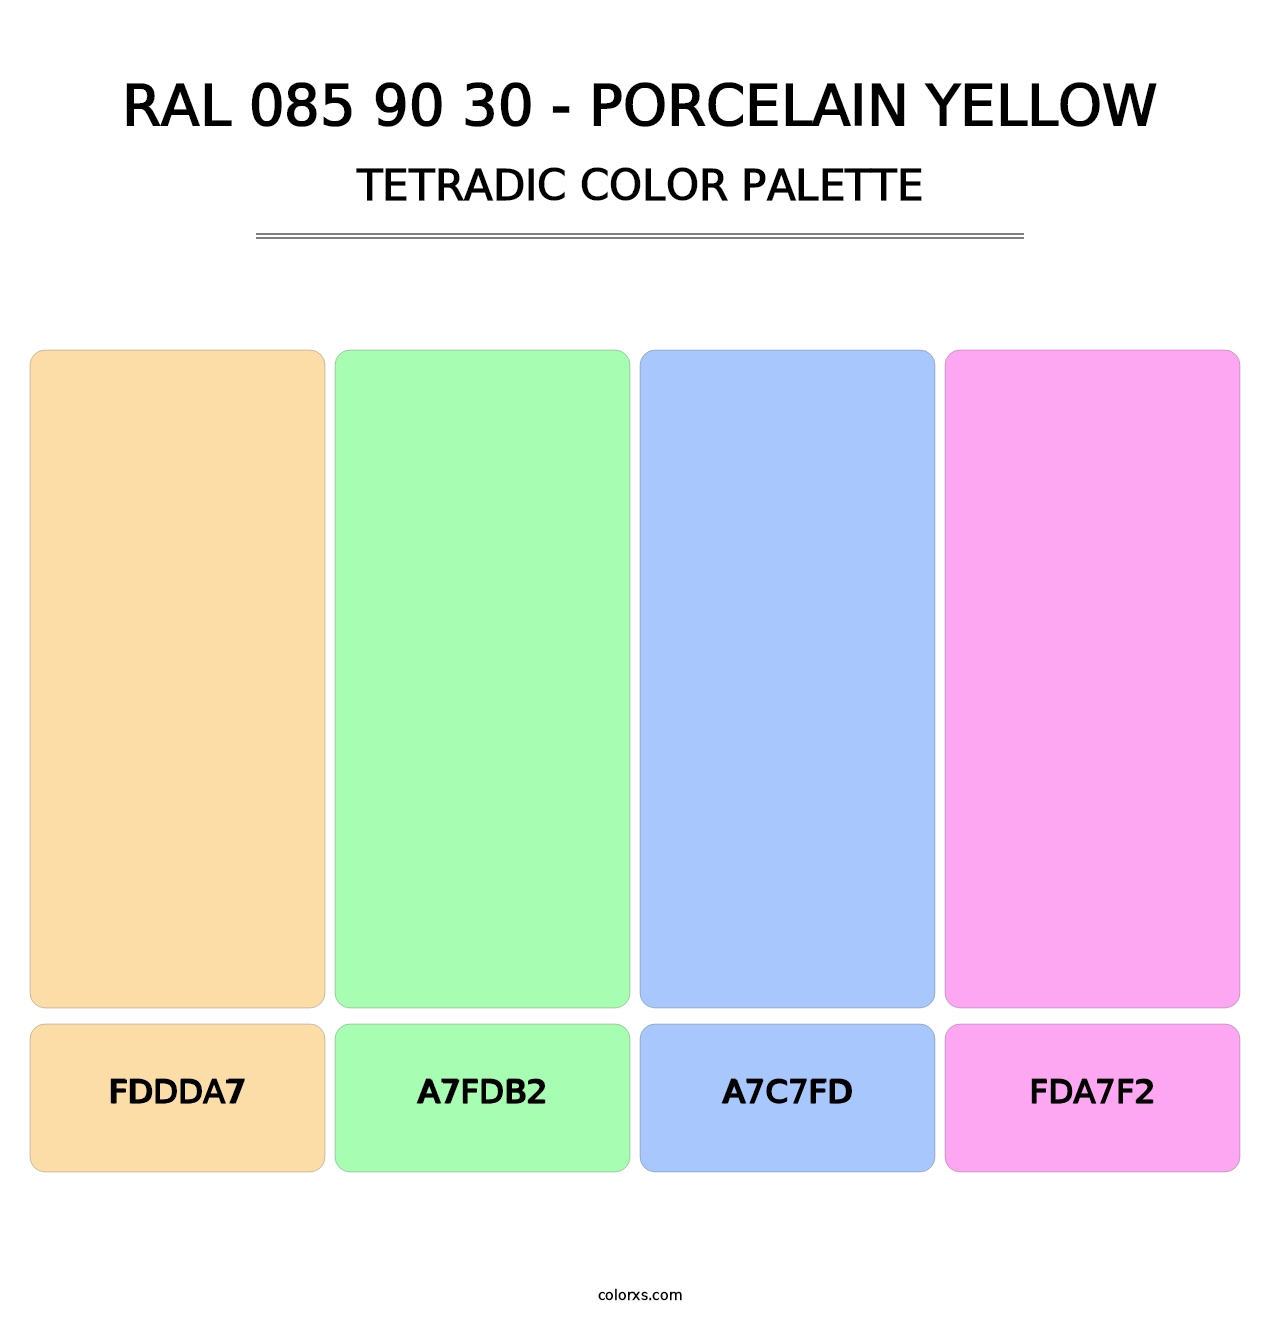 RAL 085 90 30 - Porcelain Yellow - Tetradic Color Palette